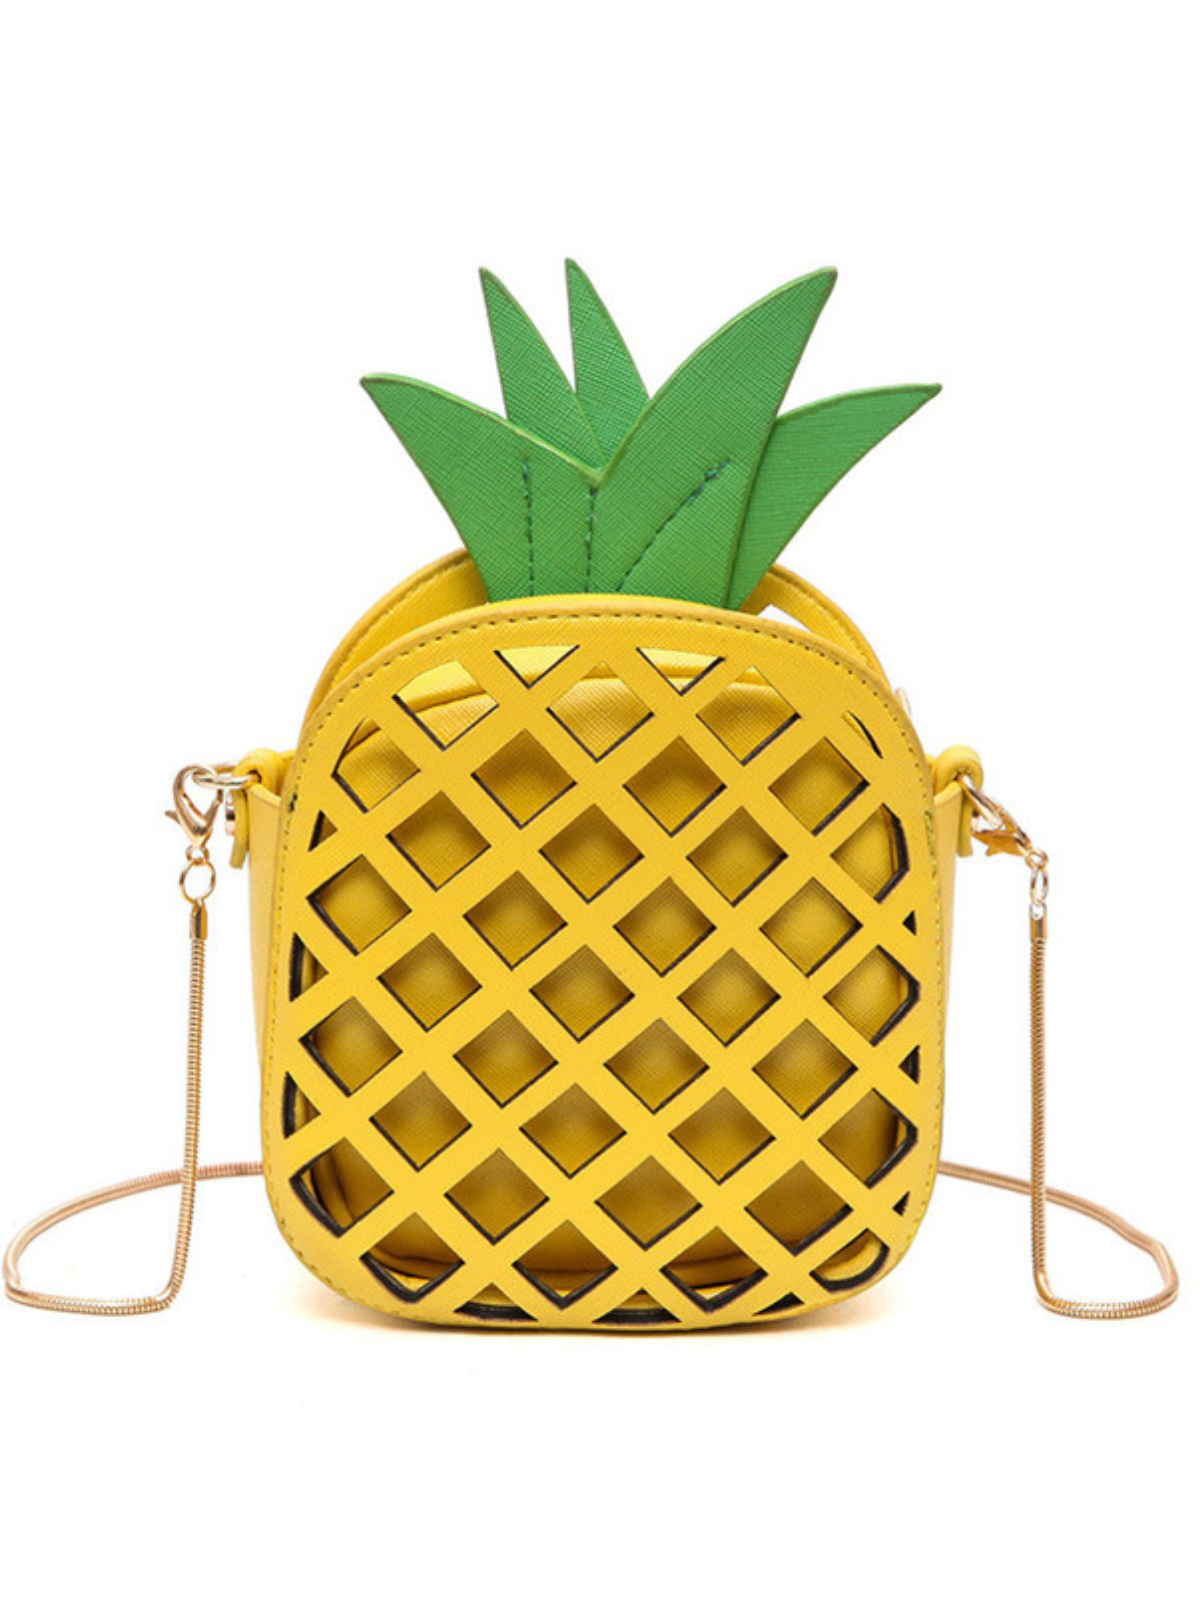 My Cartoon Pineapple Crossbody Bag